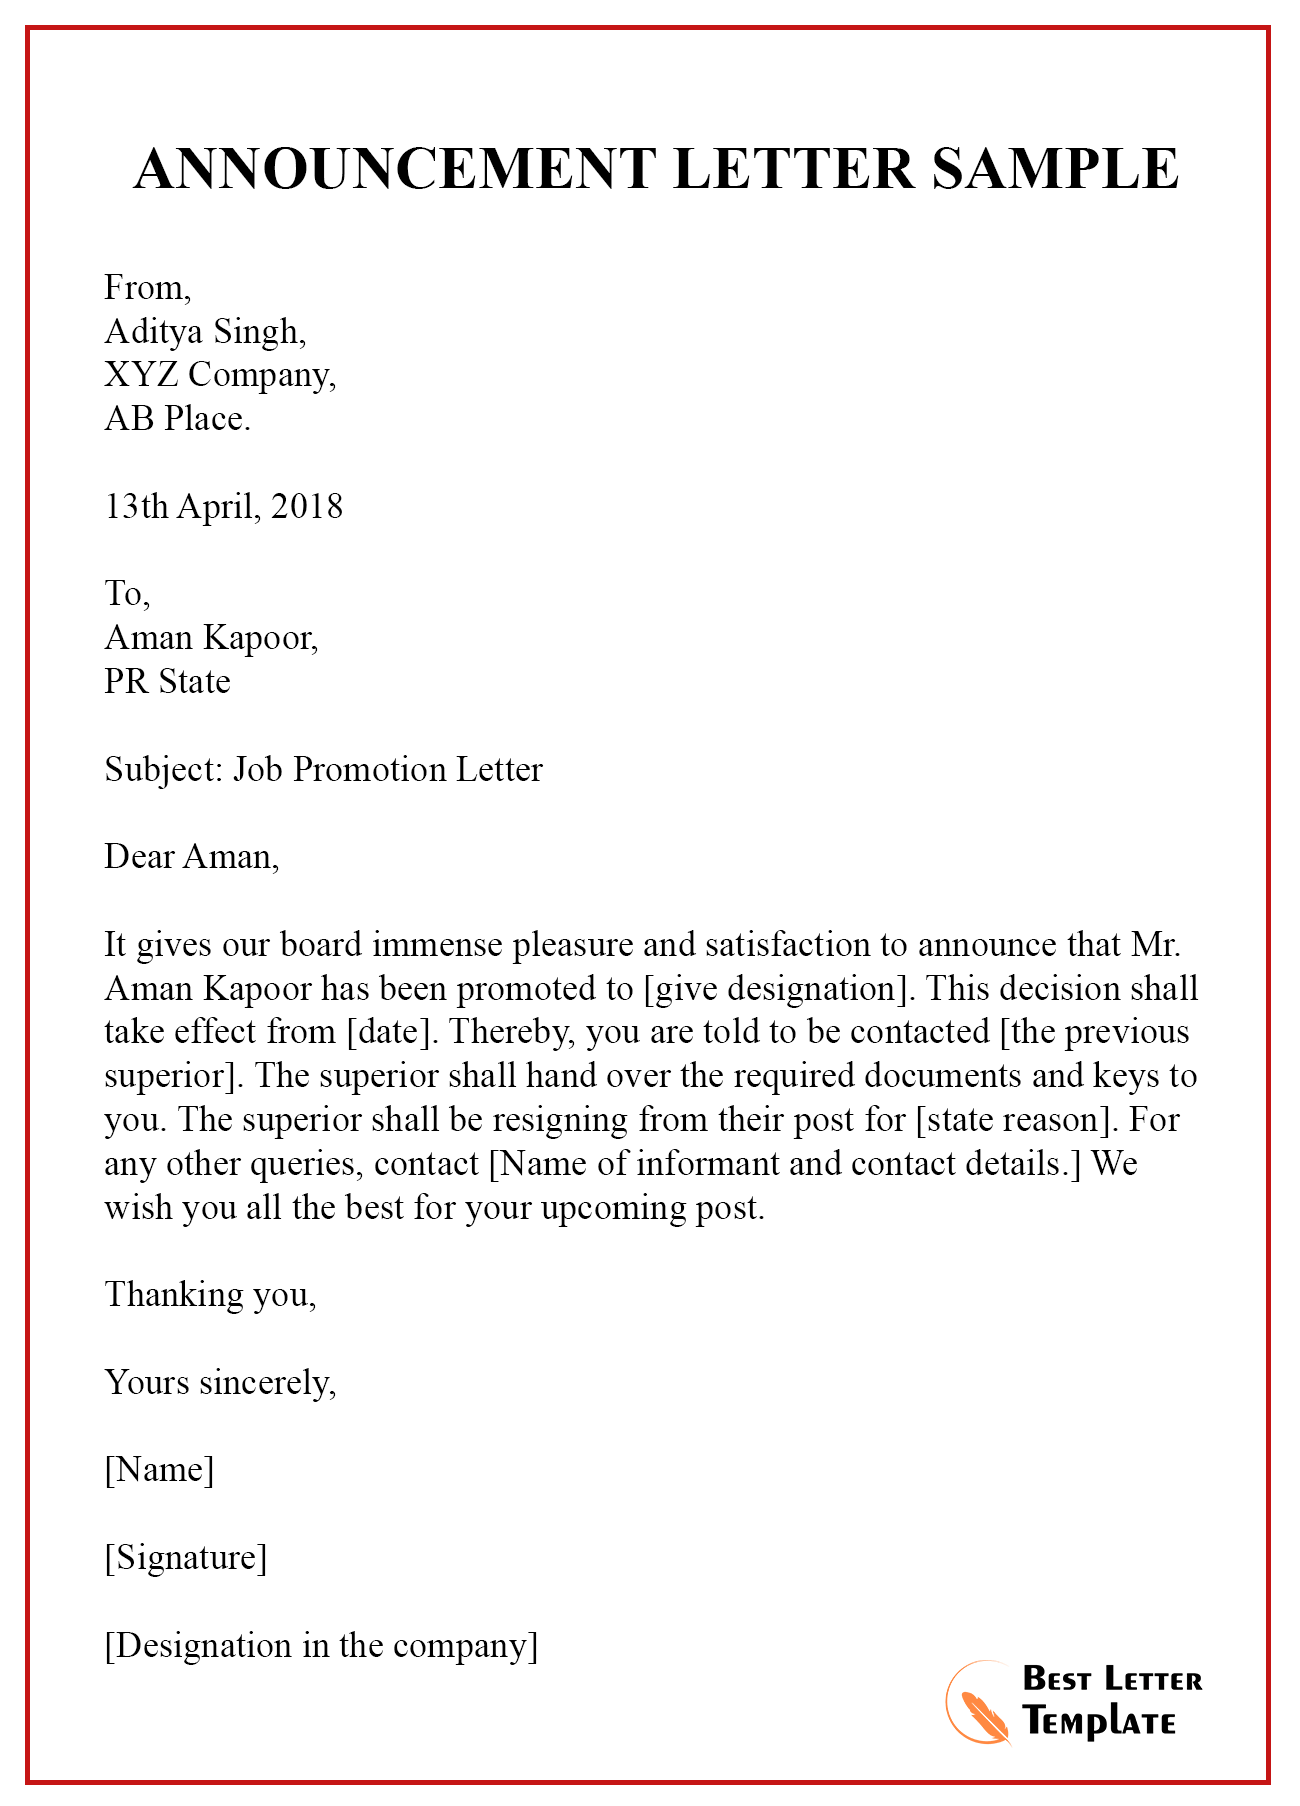 new job assignment announcement letter